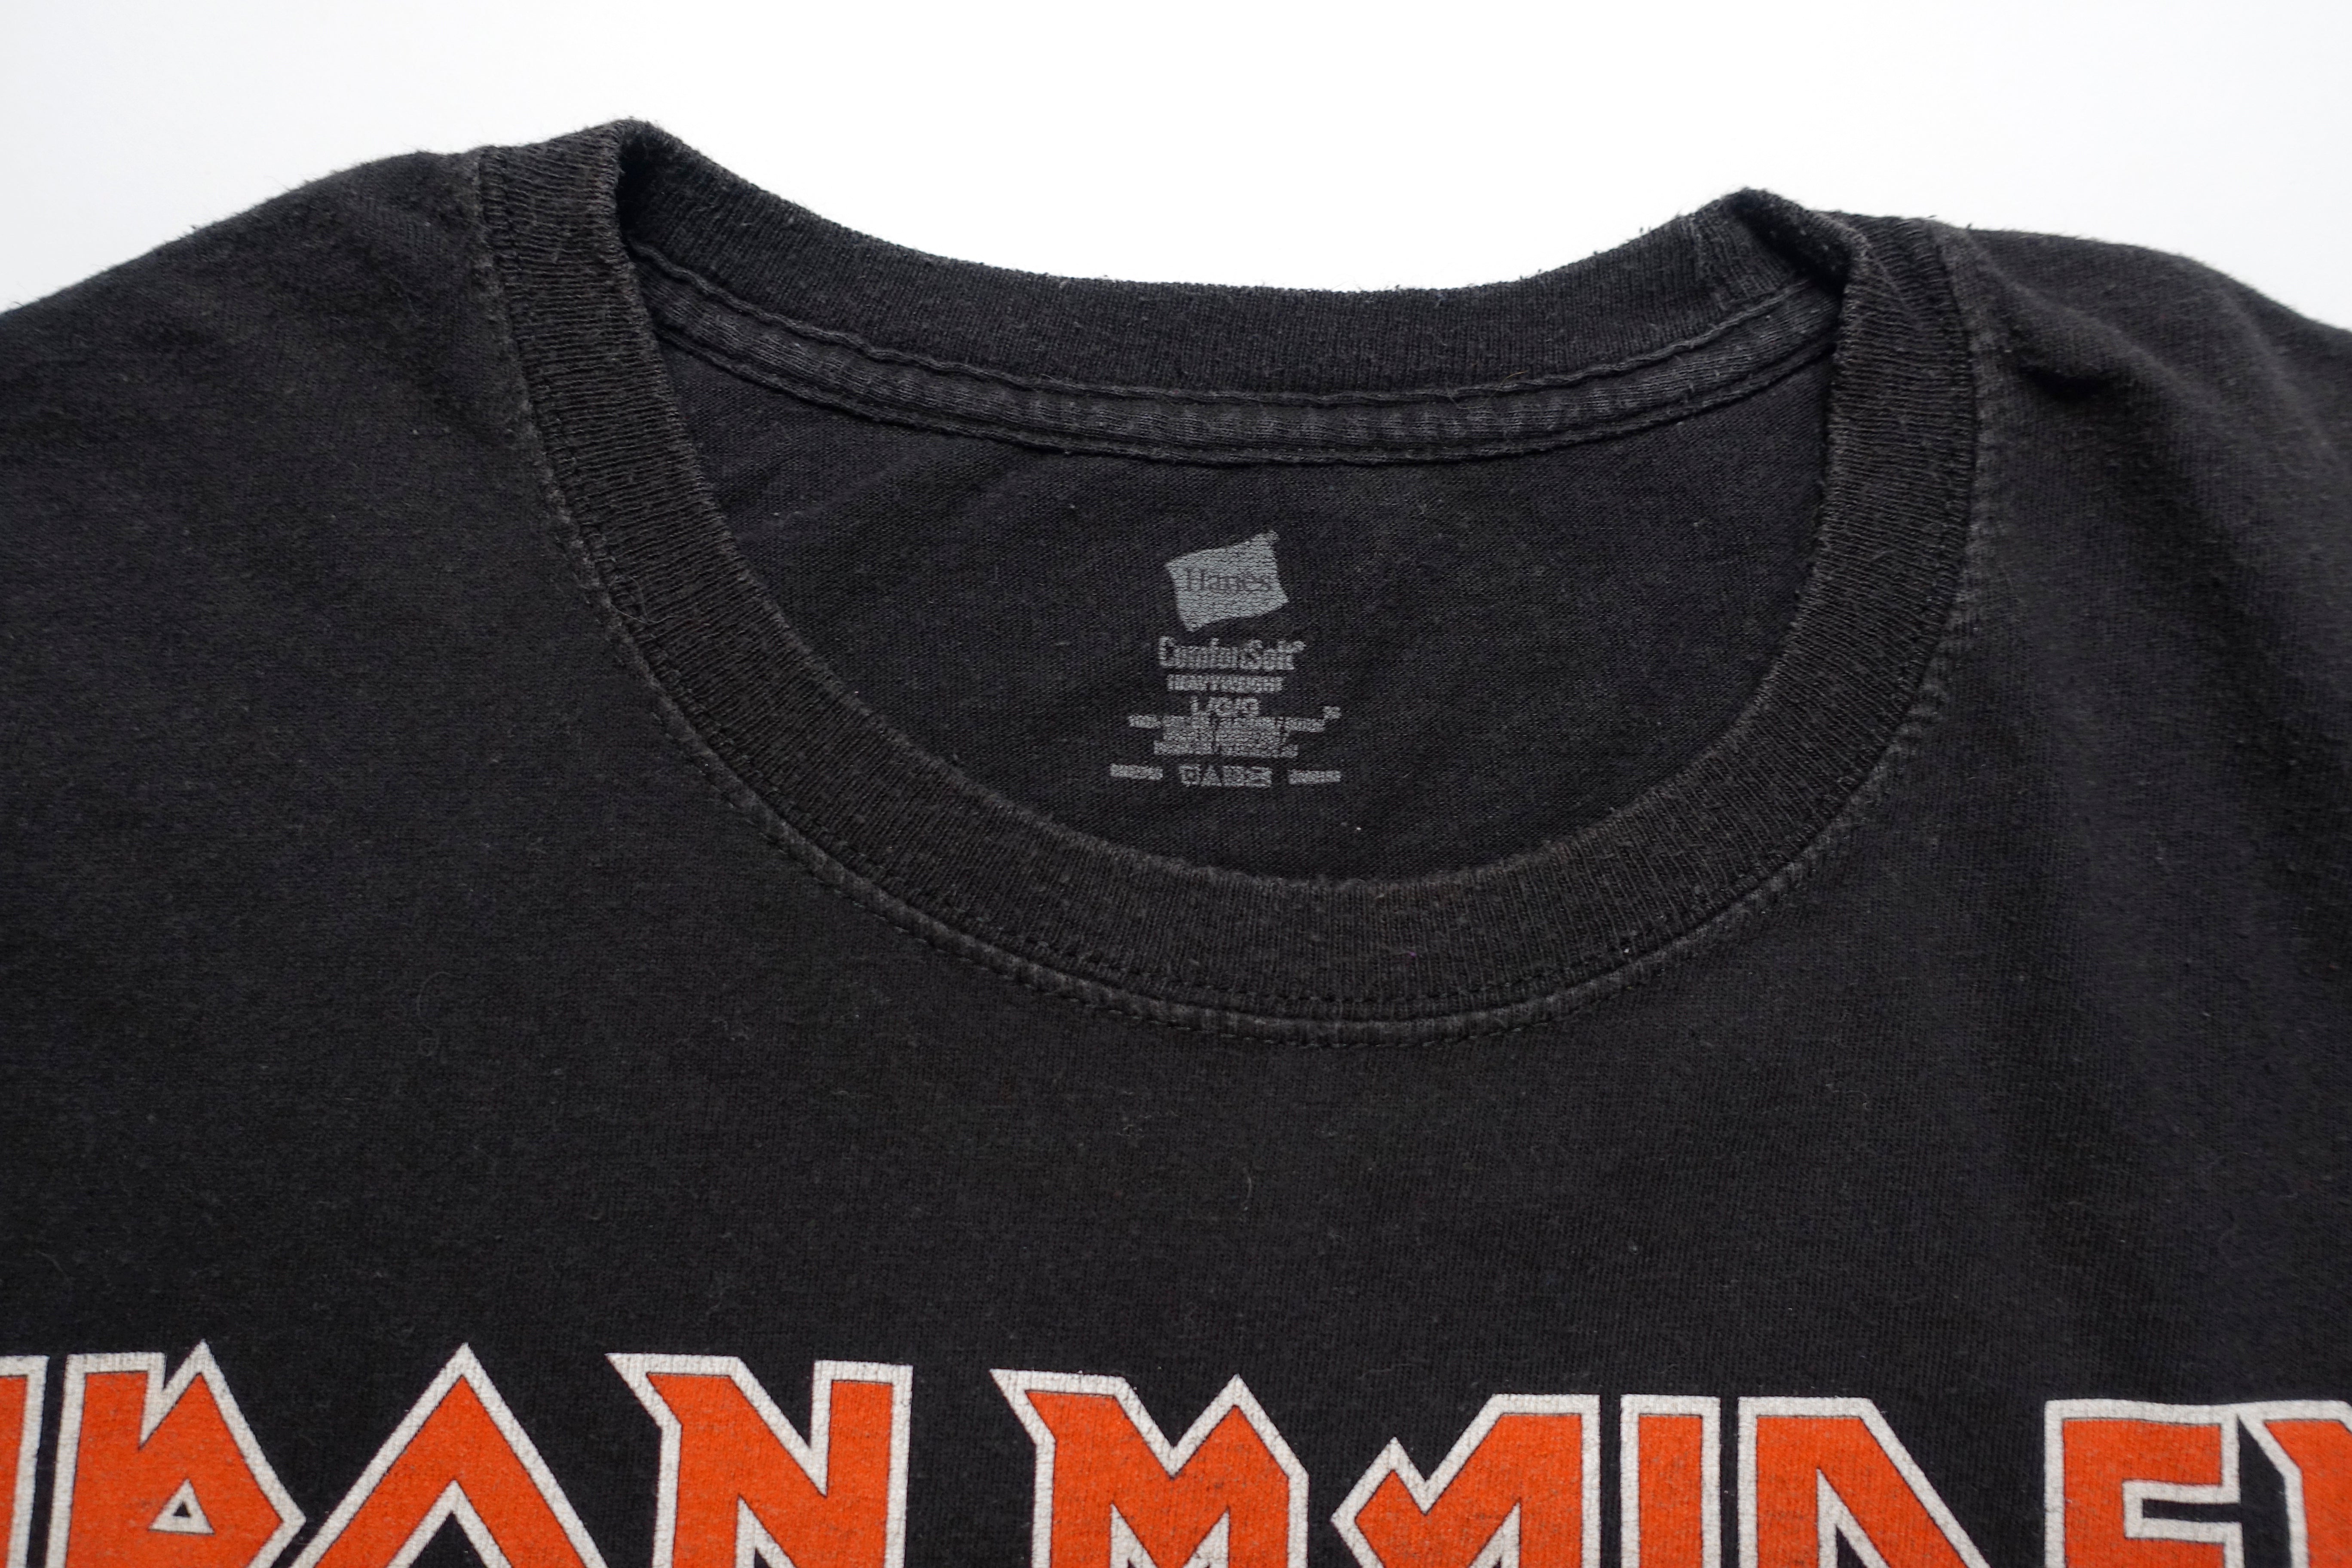 Iron Maiden – Maiden England Tour 2012 Shirt Size Large